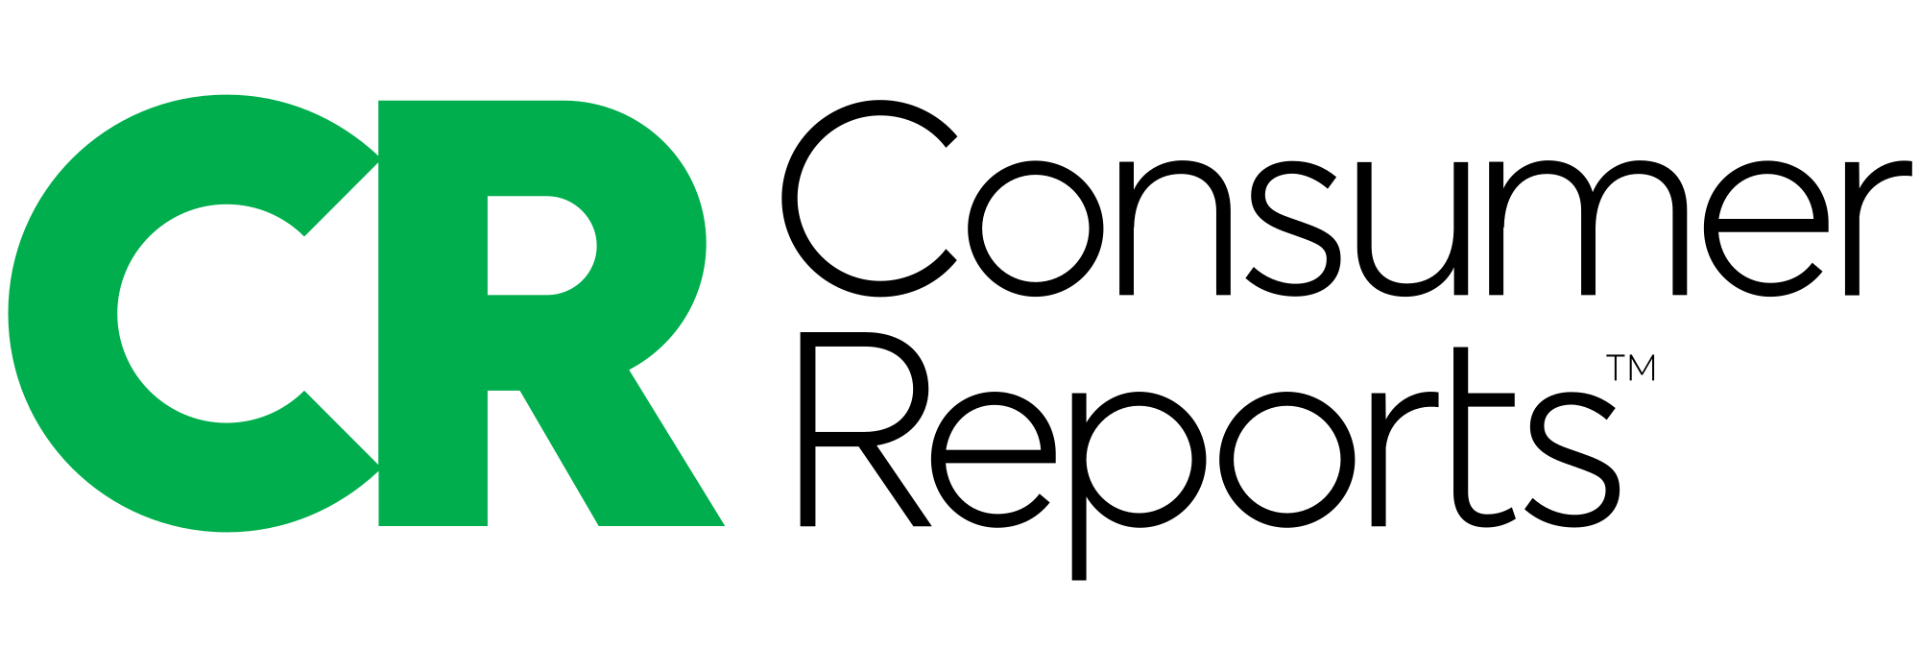 Consumer Reports logo